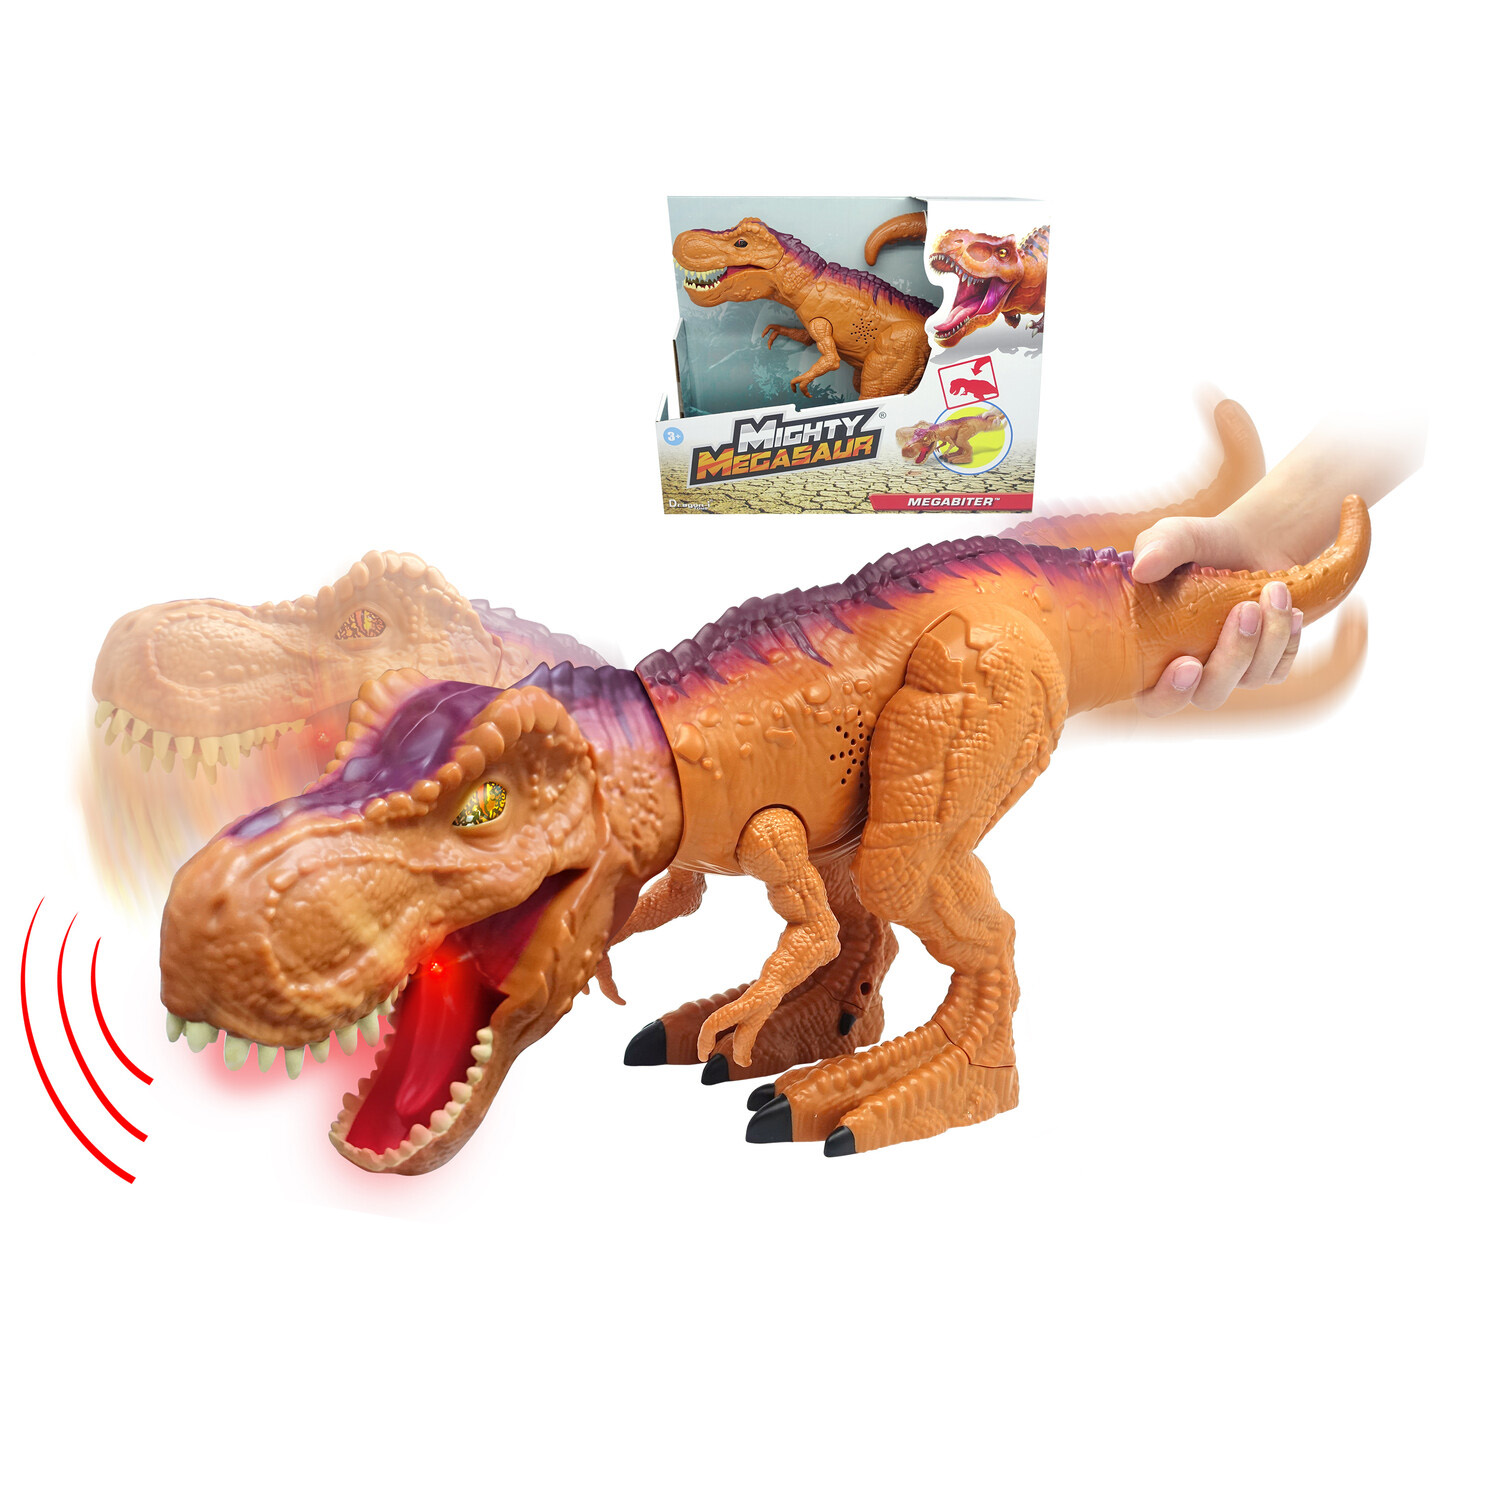 Mighty Megasaur Orange Megabiter Toy Image 1